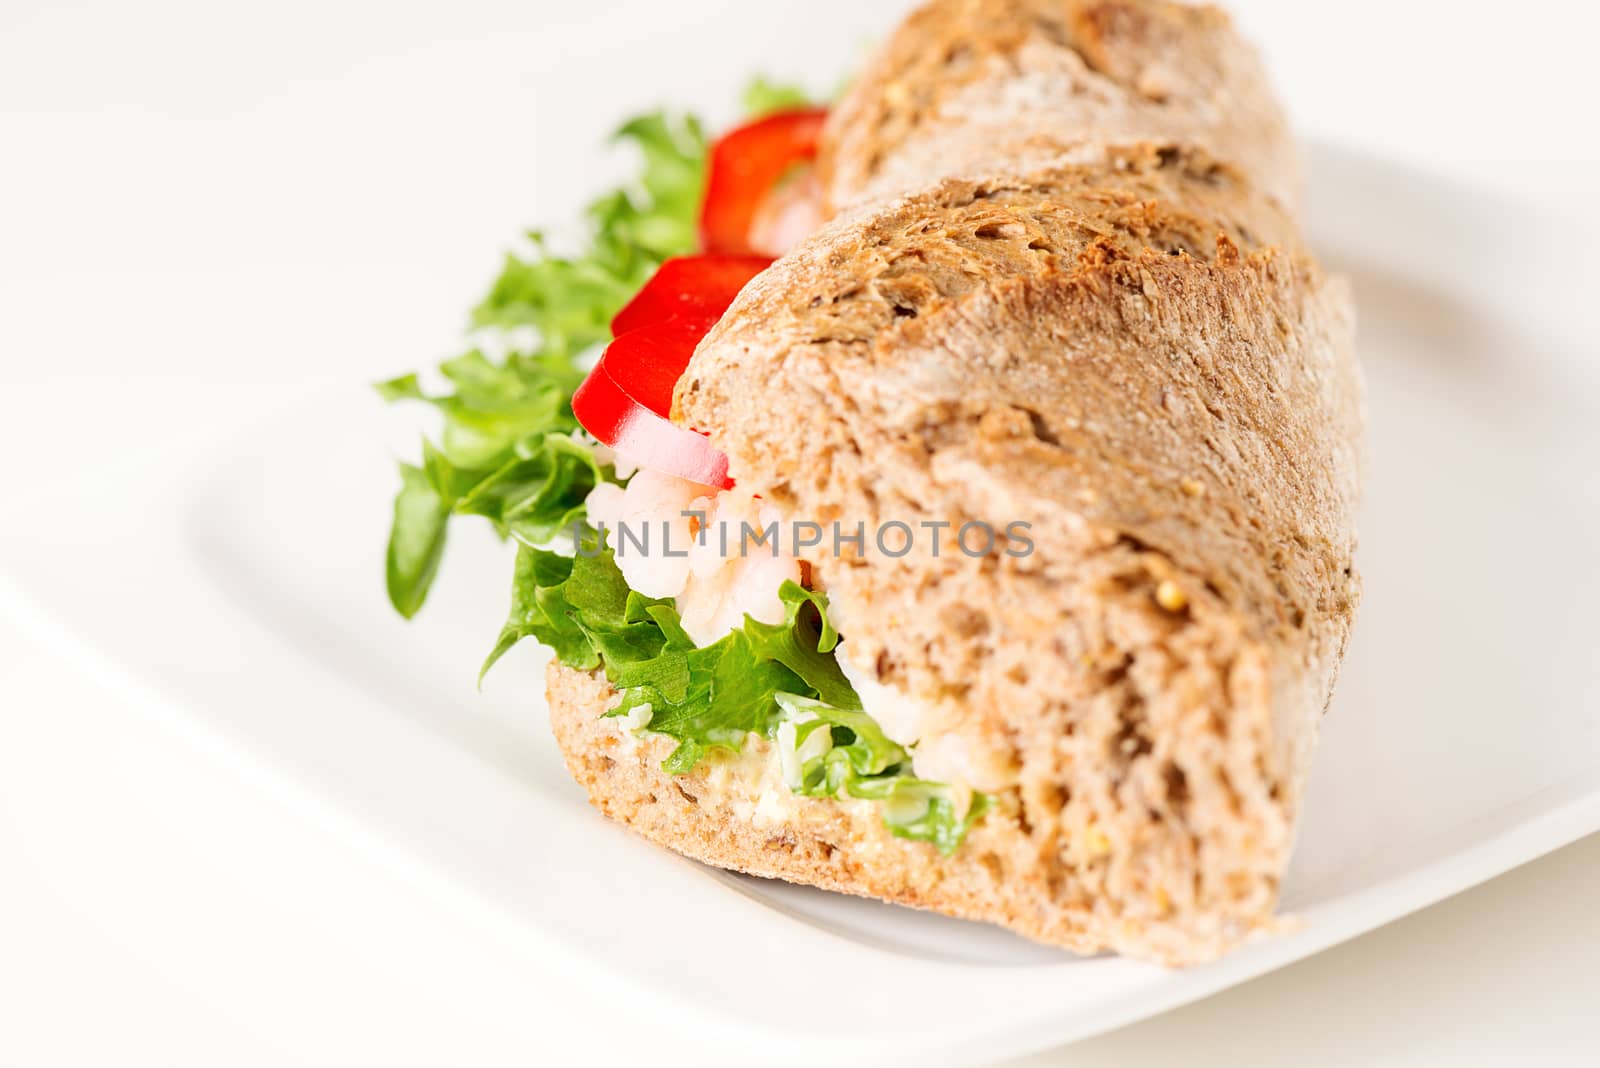 Prawn sandwich on white plate. Studio shot